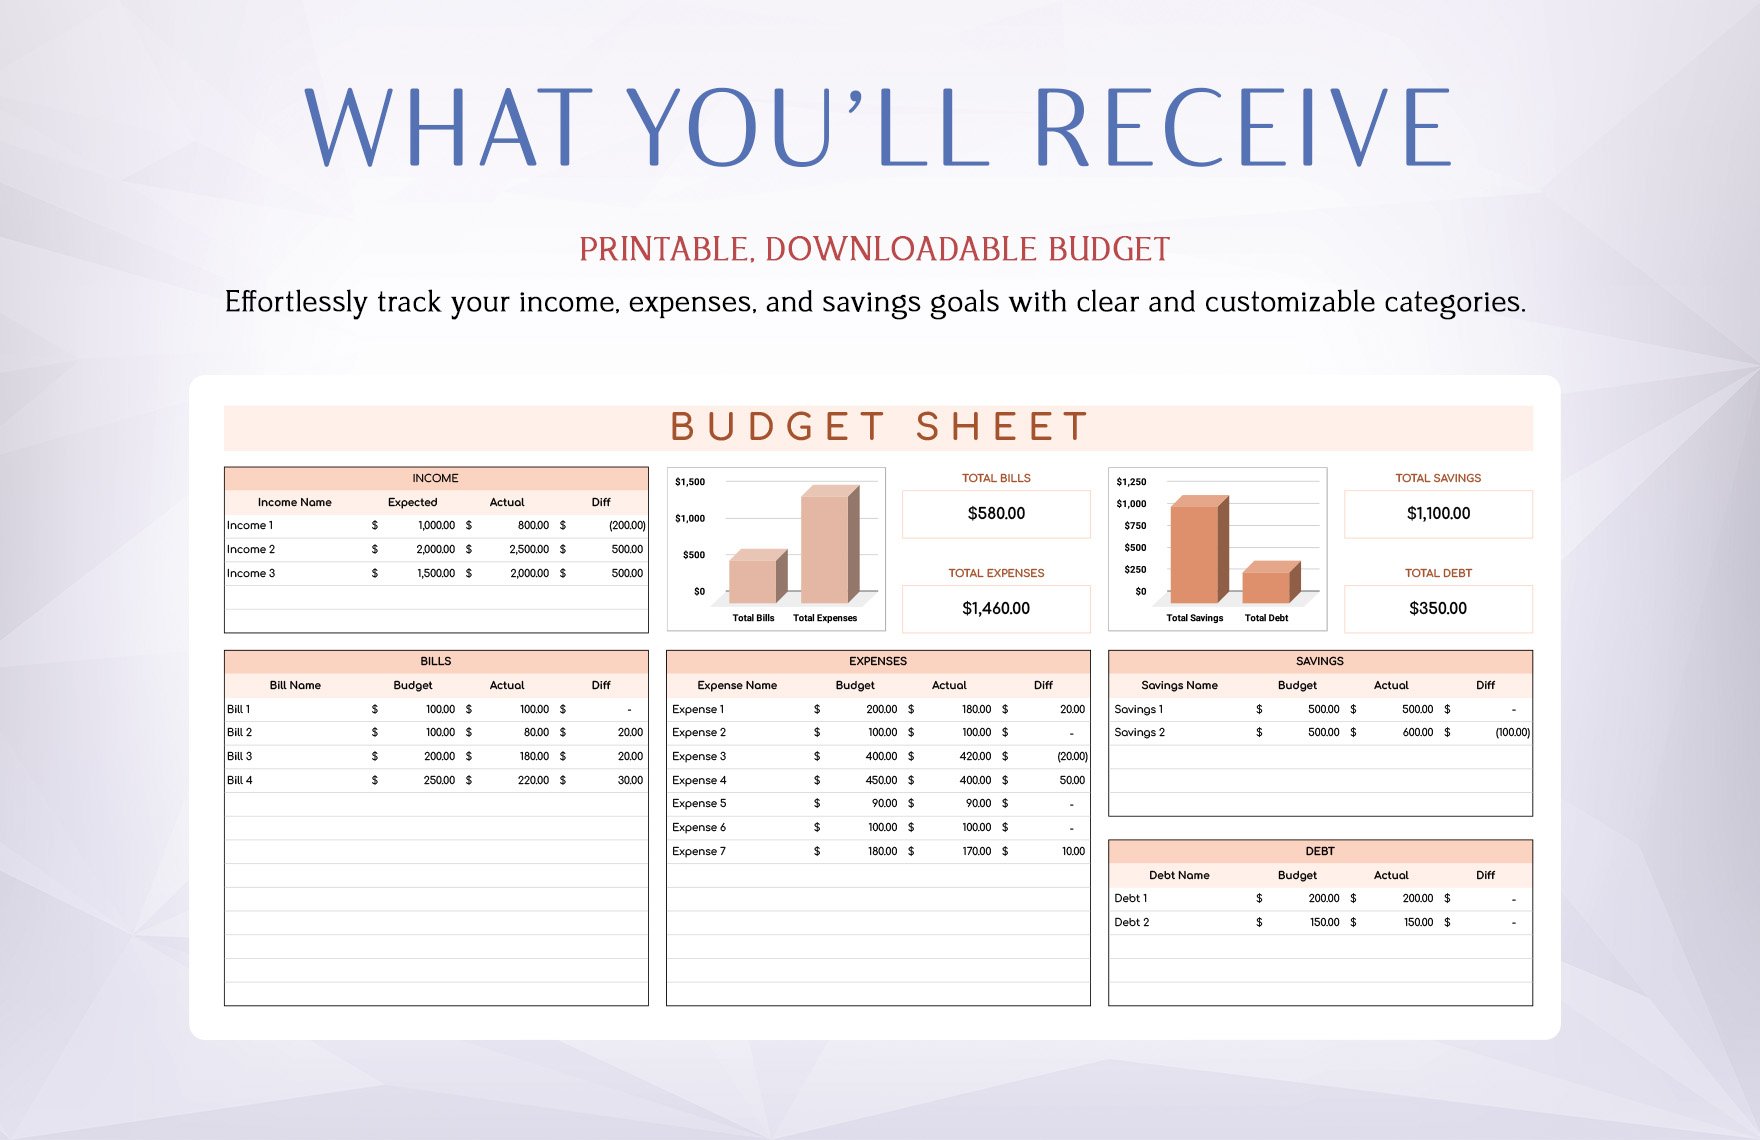 Printable, Downloadable Budget Template